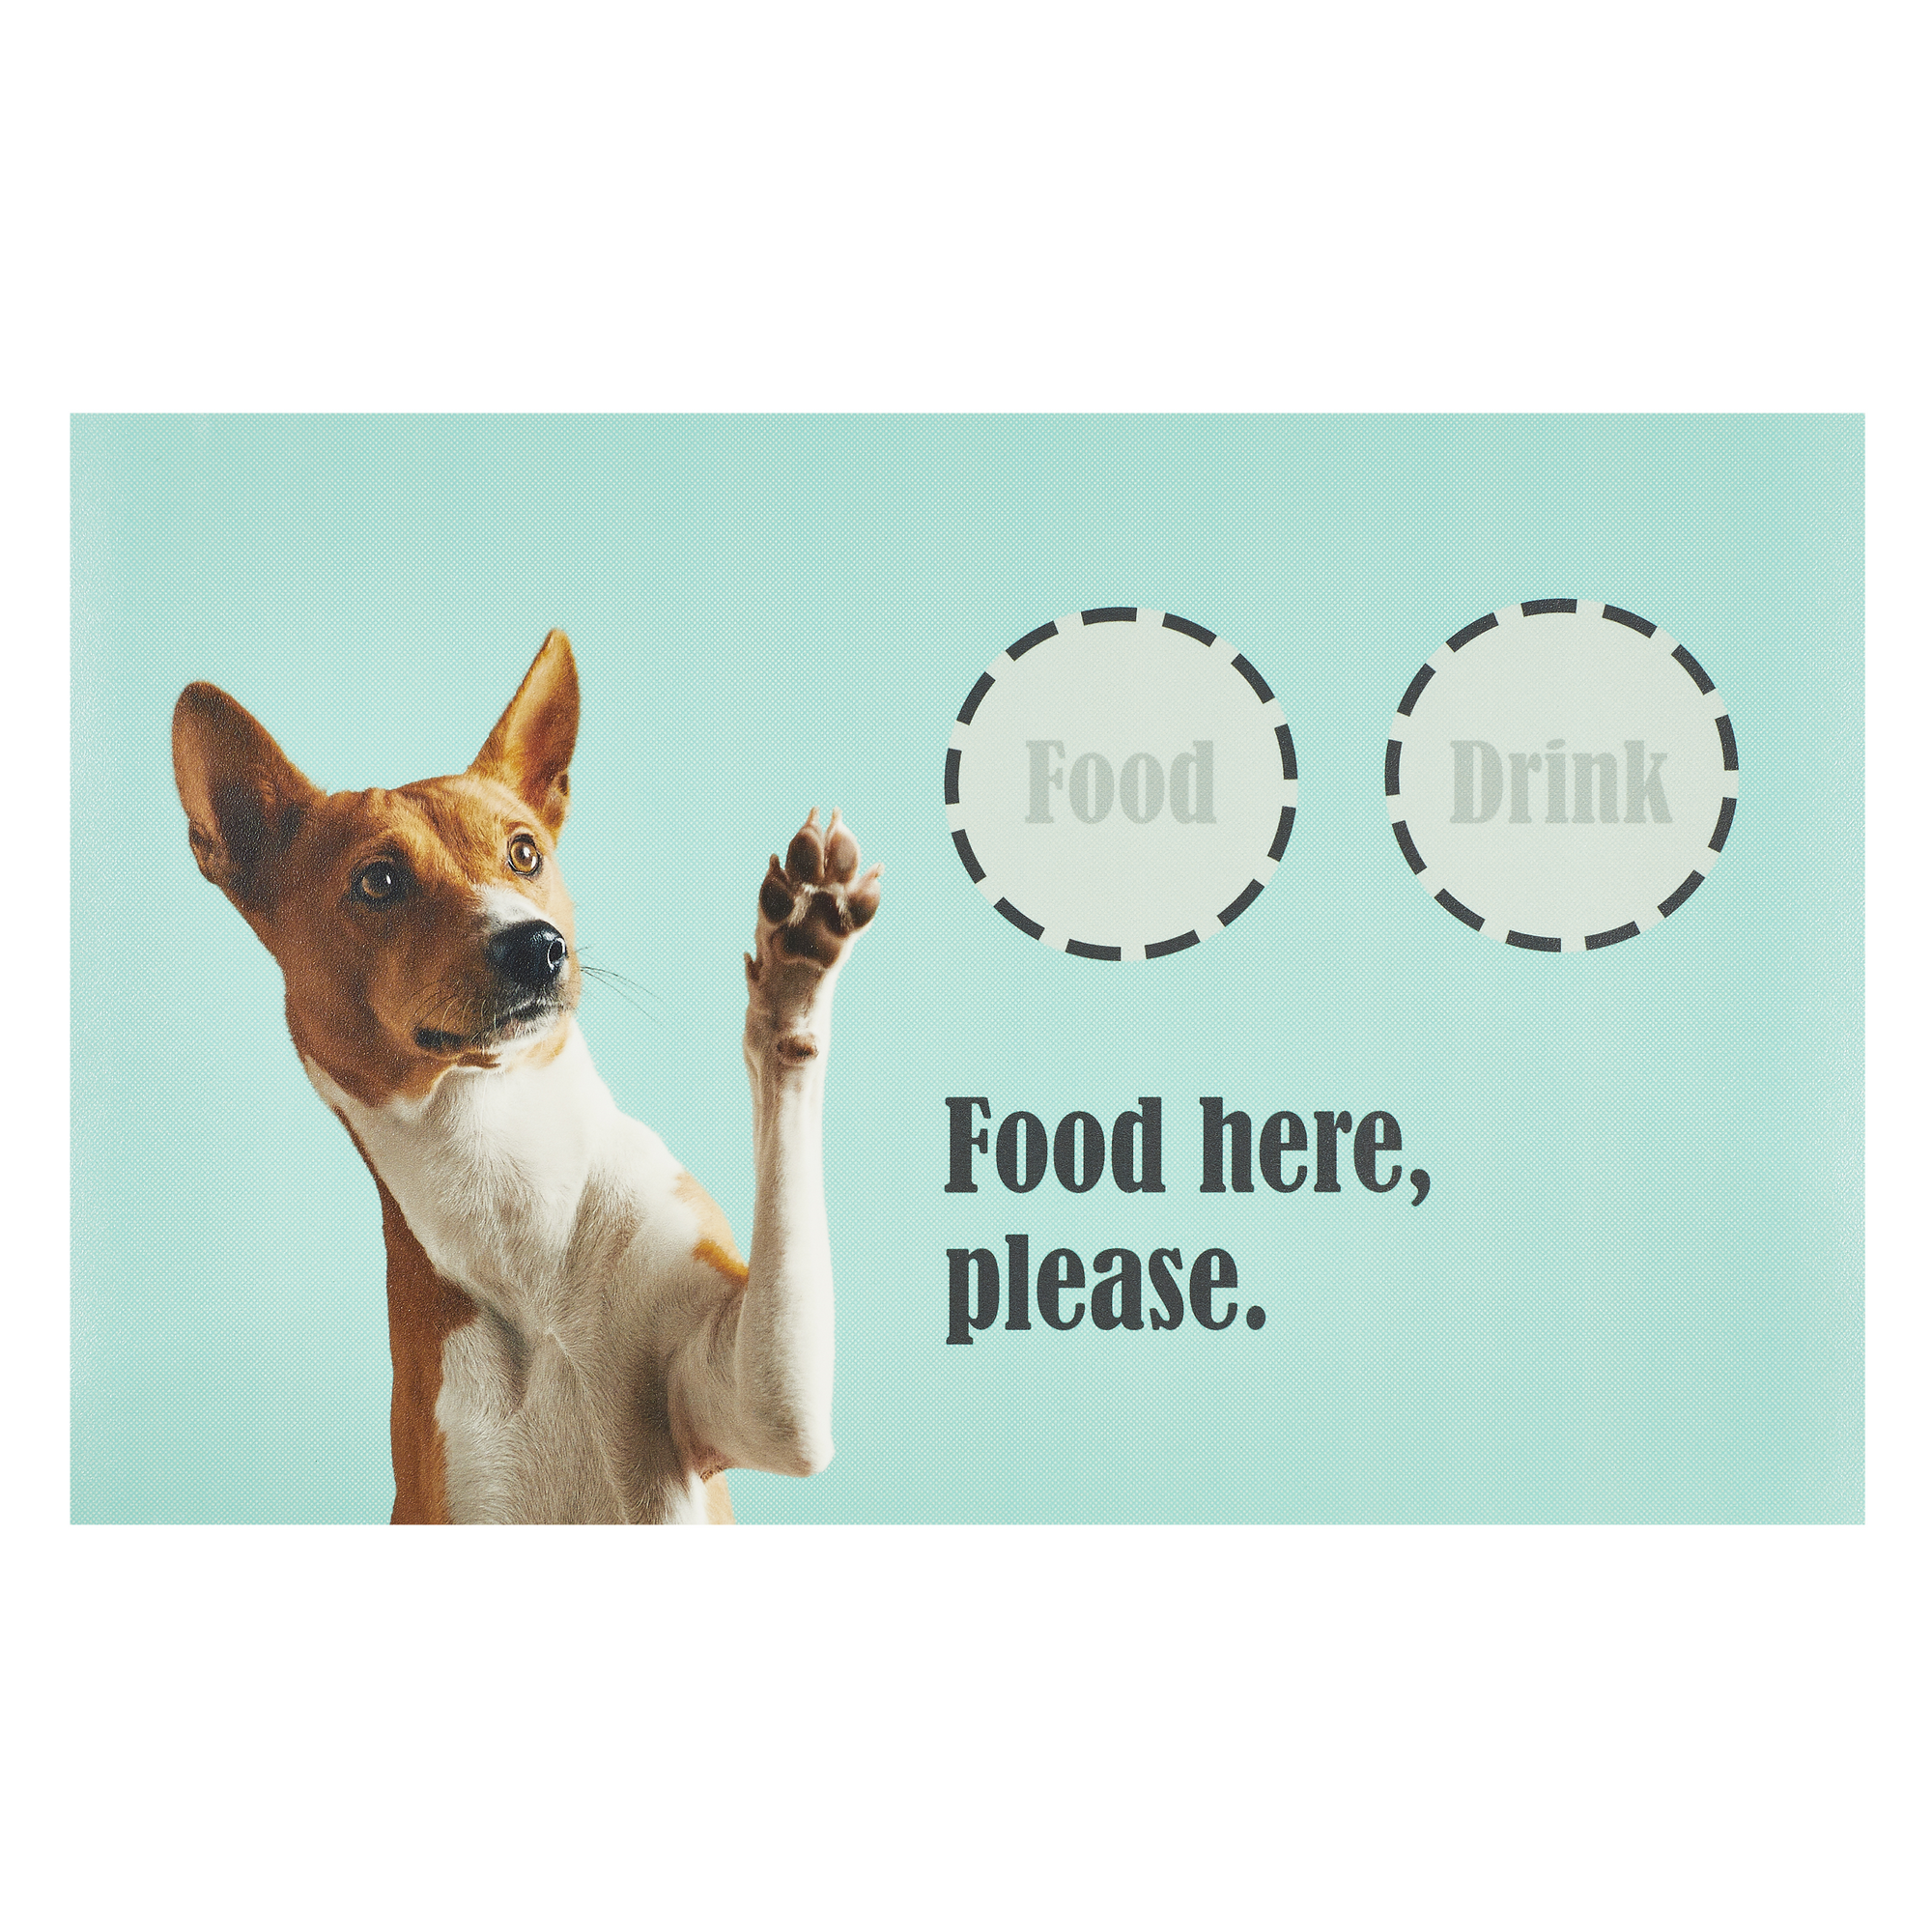 Napfunterlage 'Proper Food + Drink Please' mehrfarbig 49 x 79 cm + product picture